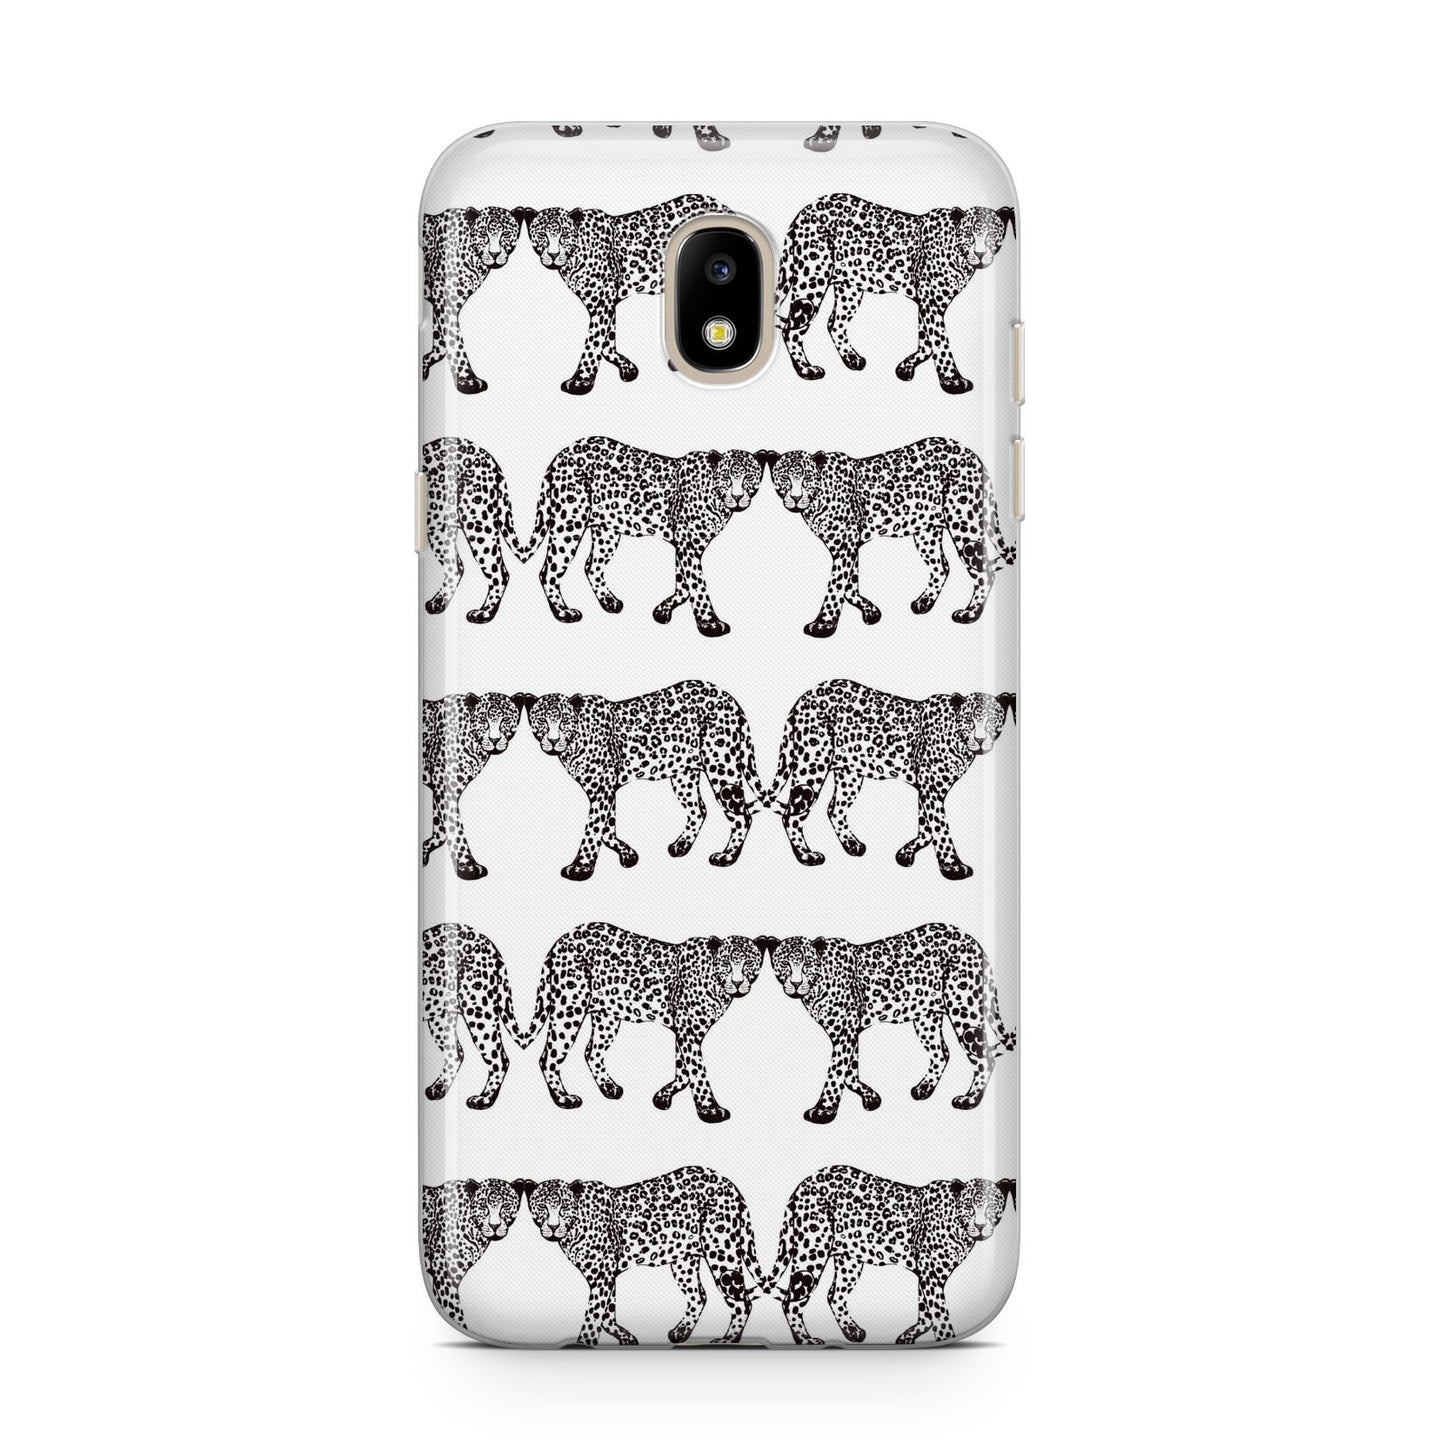 Monochrome Mirrored Leopard Print Samsung J5 2017 Case